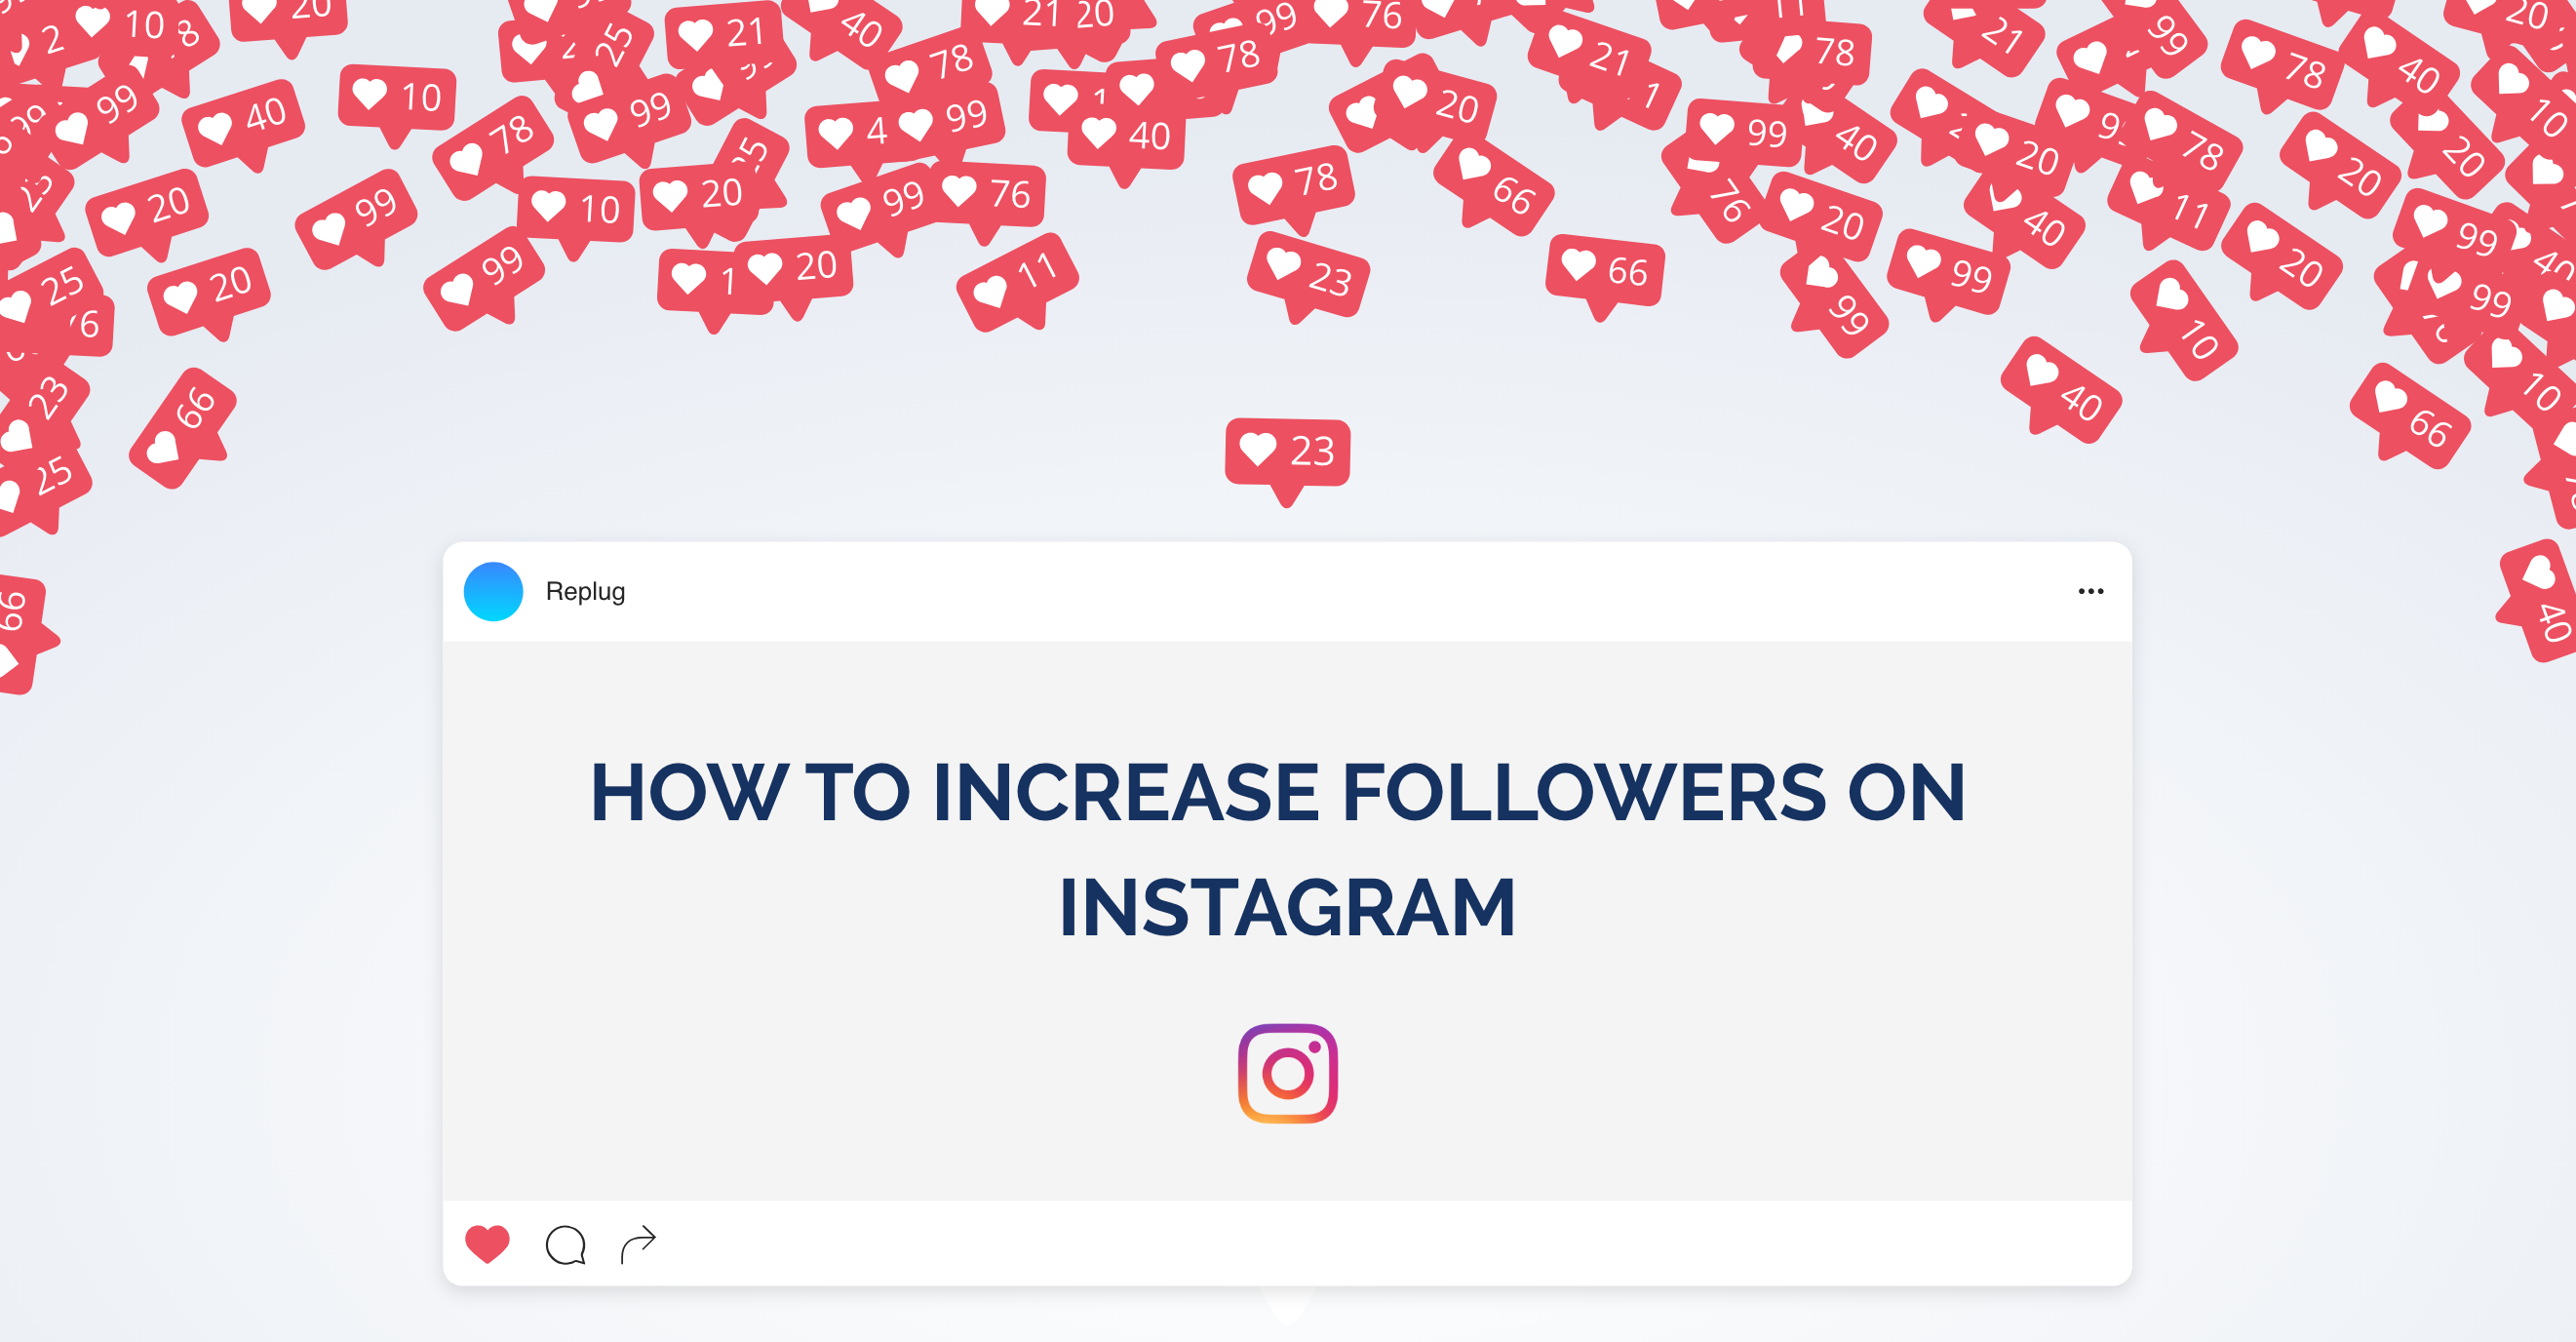 Increase followers on Instagram - ContentStudio